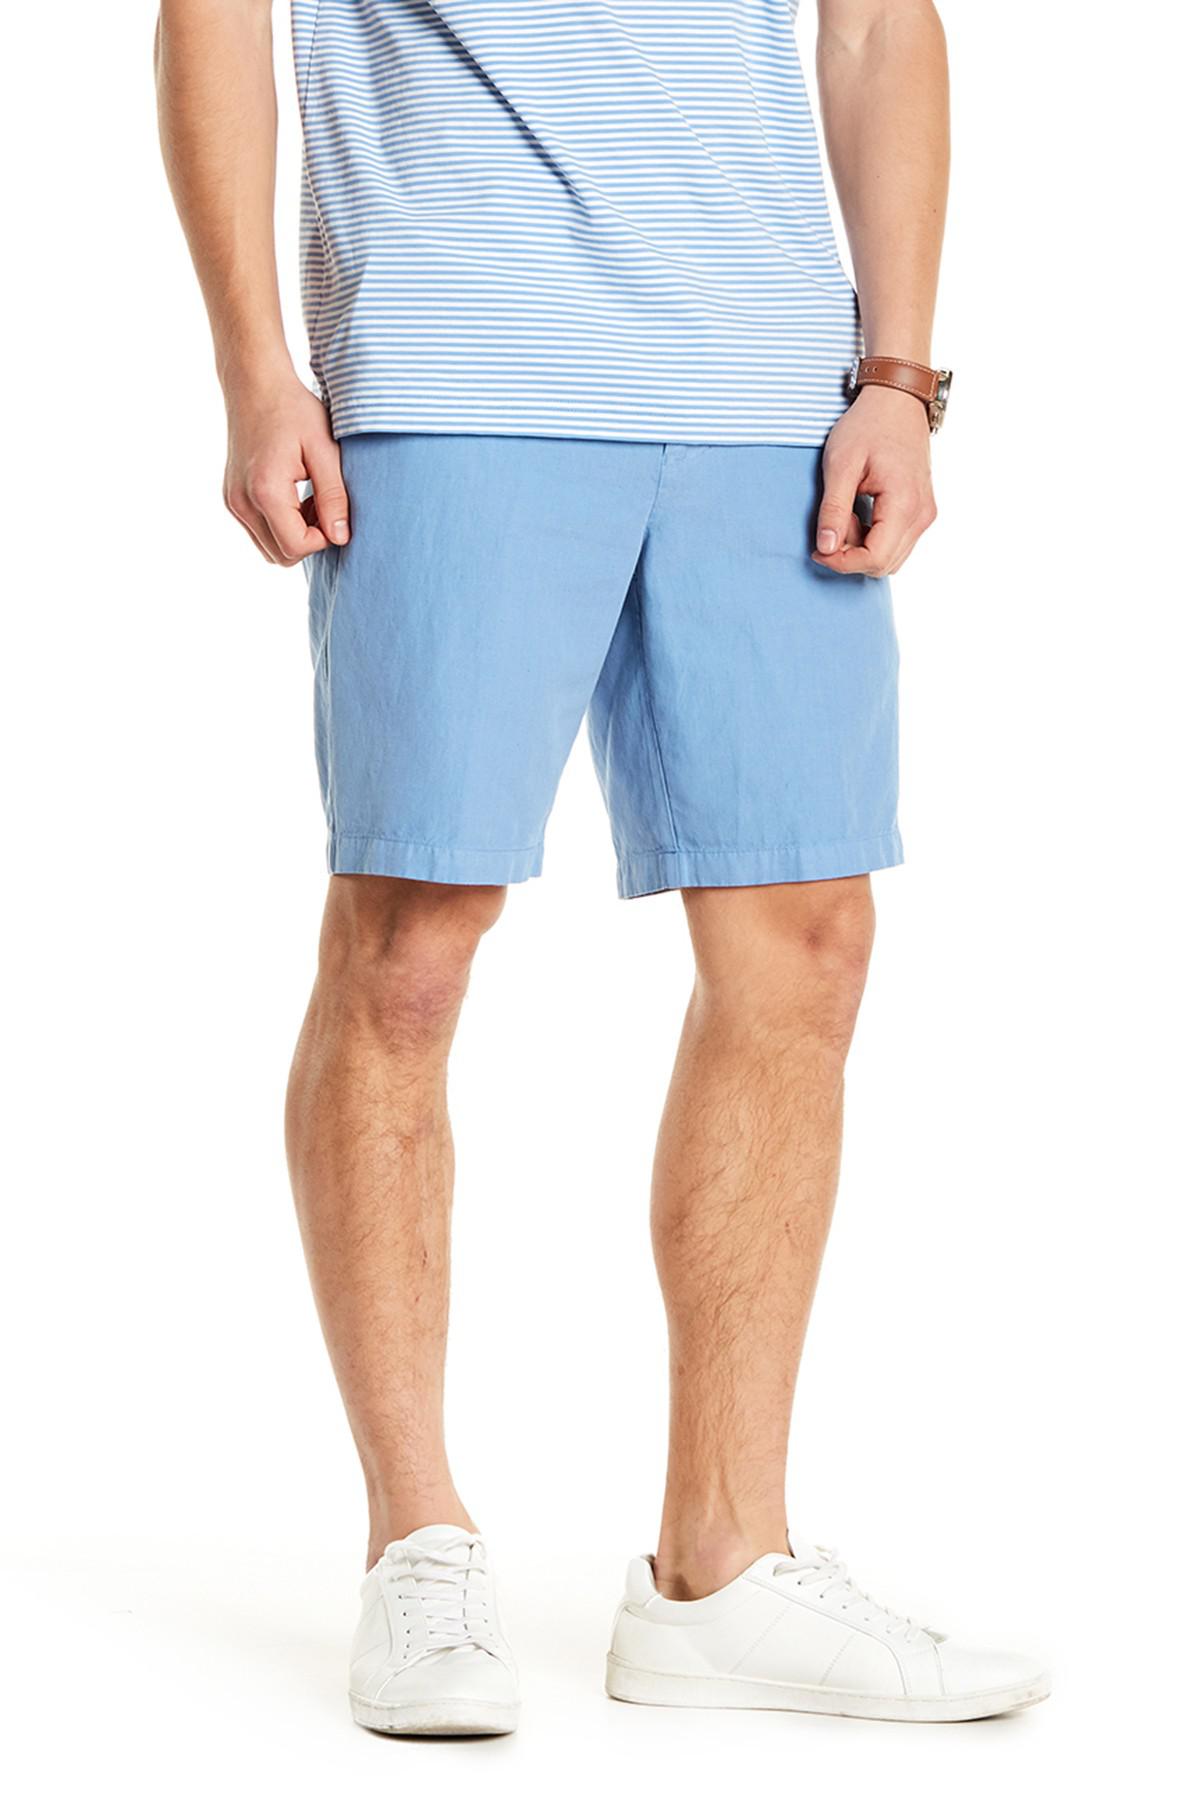 Lyst - Peter Millar Seaside Chino Shorts in Blue for Men